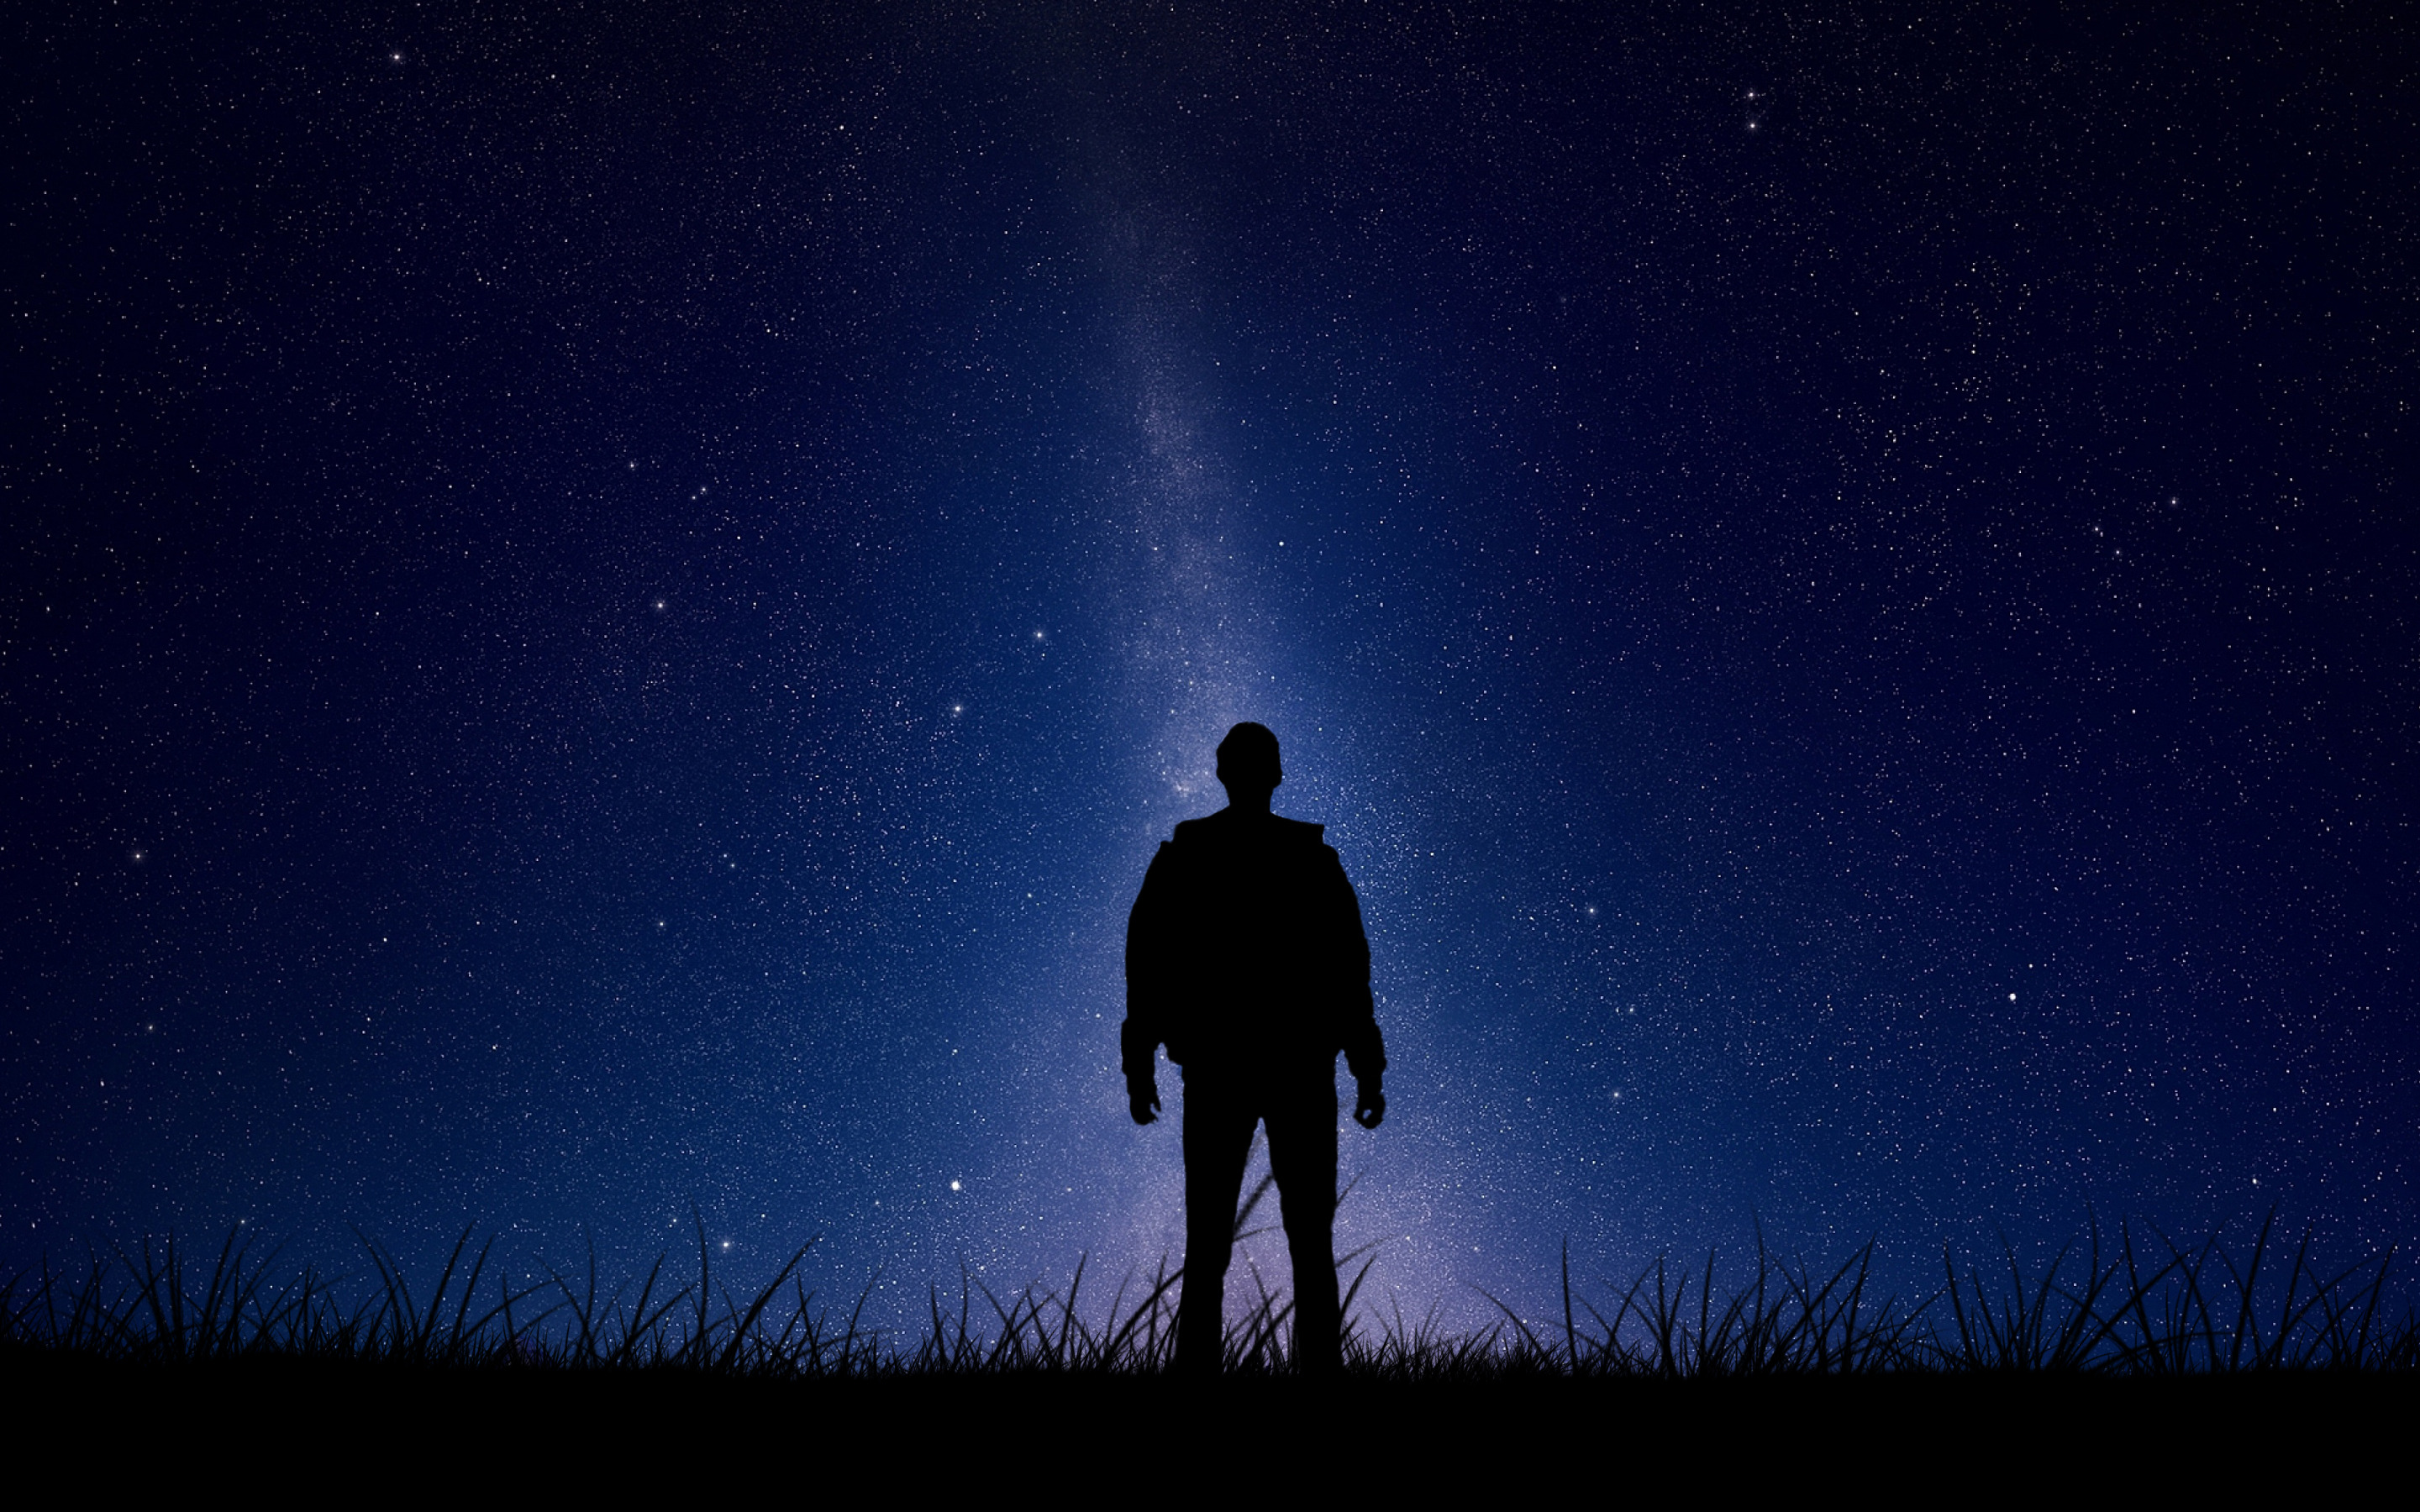 Starman waiting in the sky. Человек и ночное небо. Человек на фоне звездного неба. Человек в ночи. Силуэт человека на фоне неба.